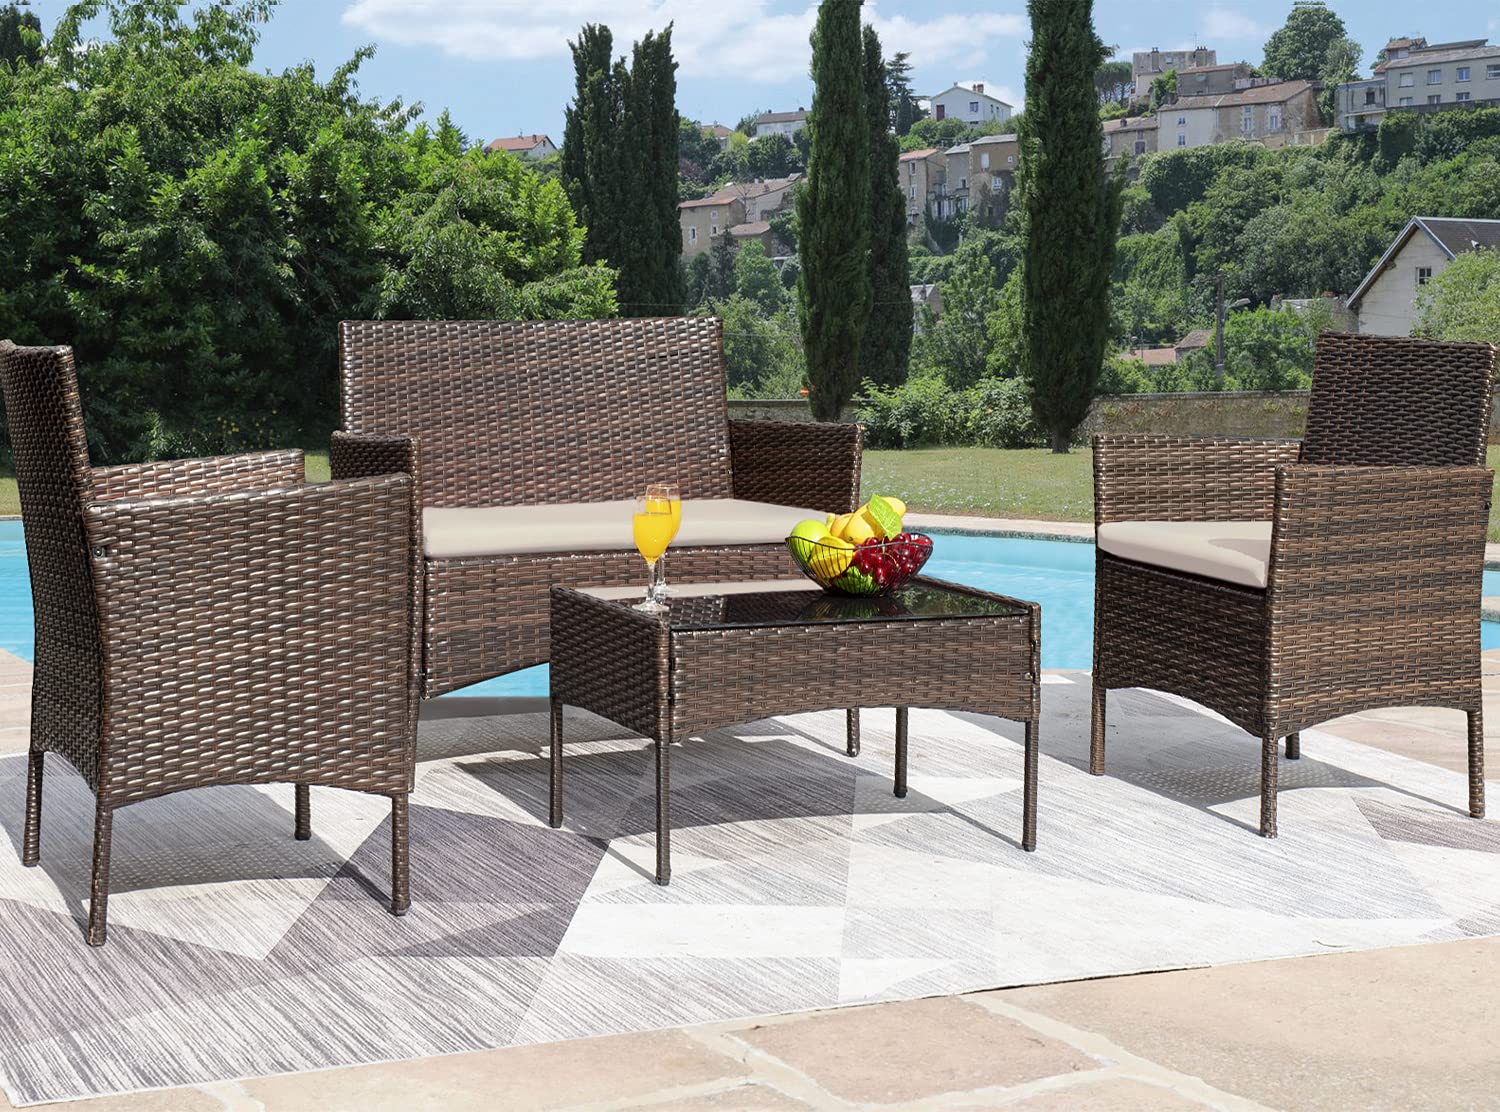 Patio Furniture 4 Pieces Conversation Sets Outdoor Wicker Rattan Chairs Garden Backyard